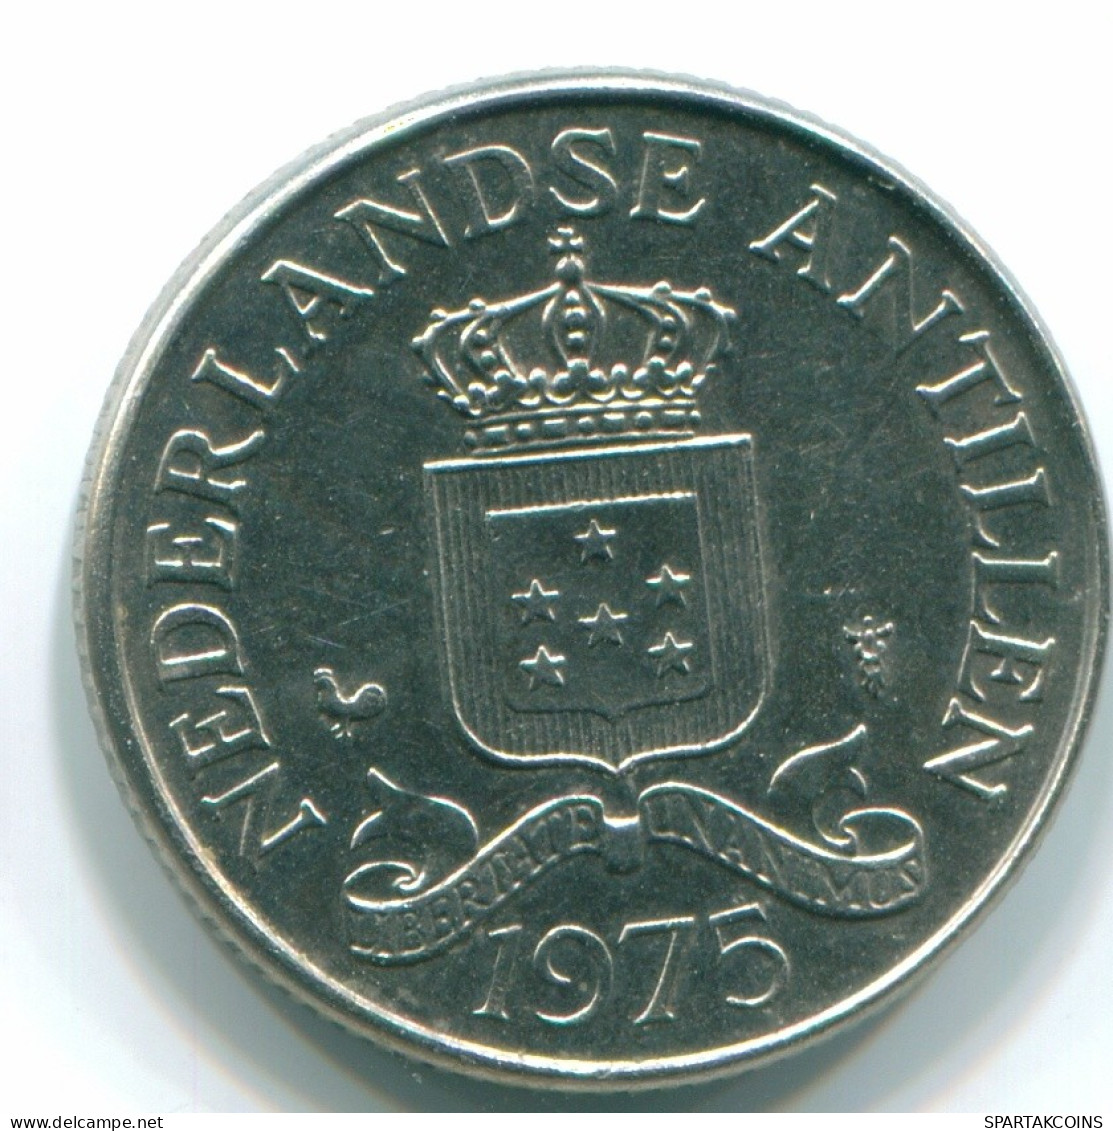 25 CENTS 1975 NETHERLANDS ANTILLES Nickel Colonial Coin #S11630.U.A - Antilles Néerlandaises